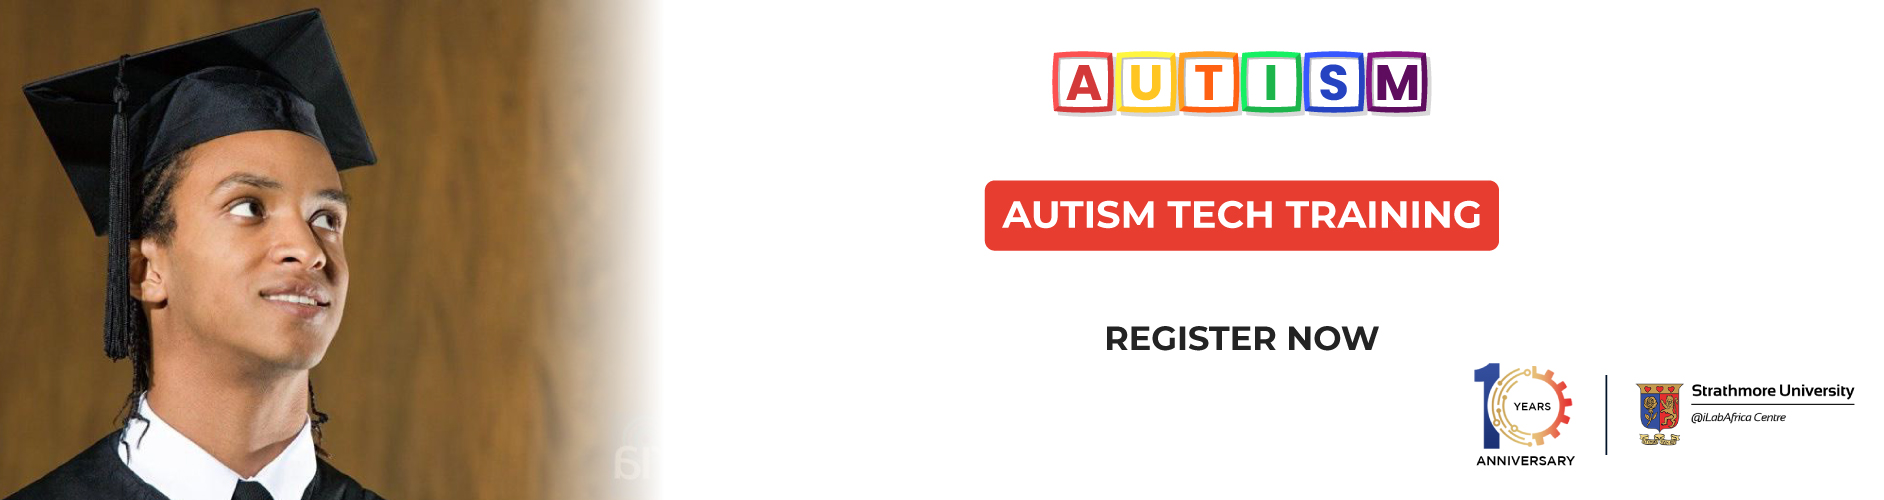 Autism-Banner-3